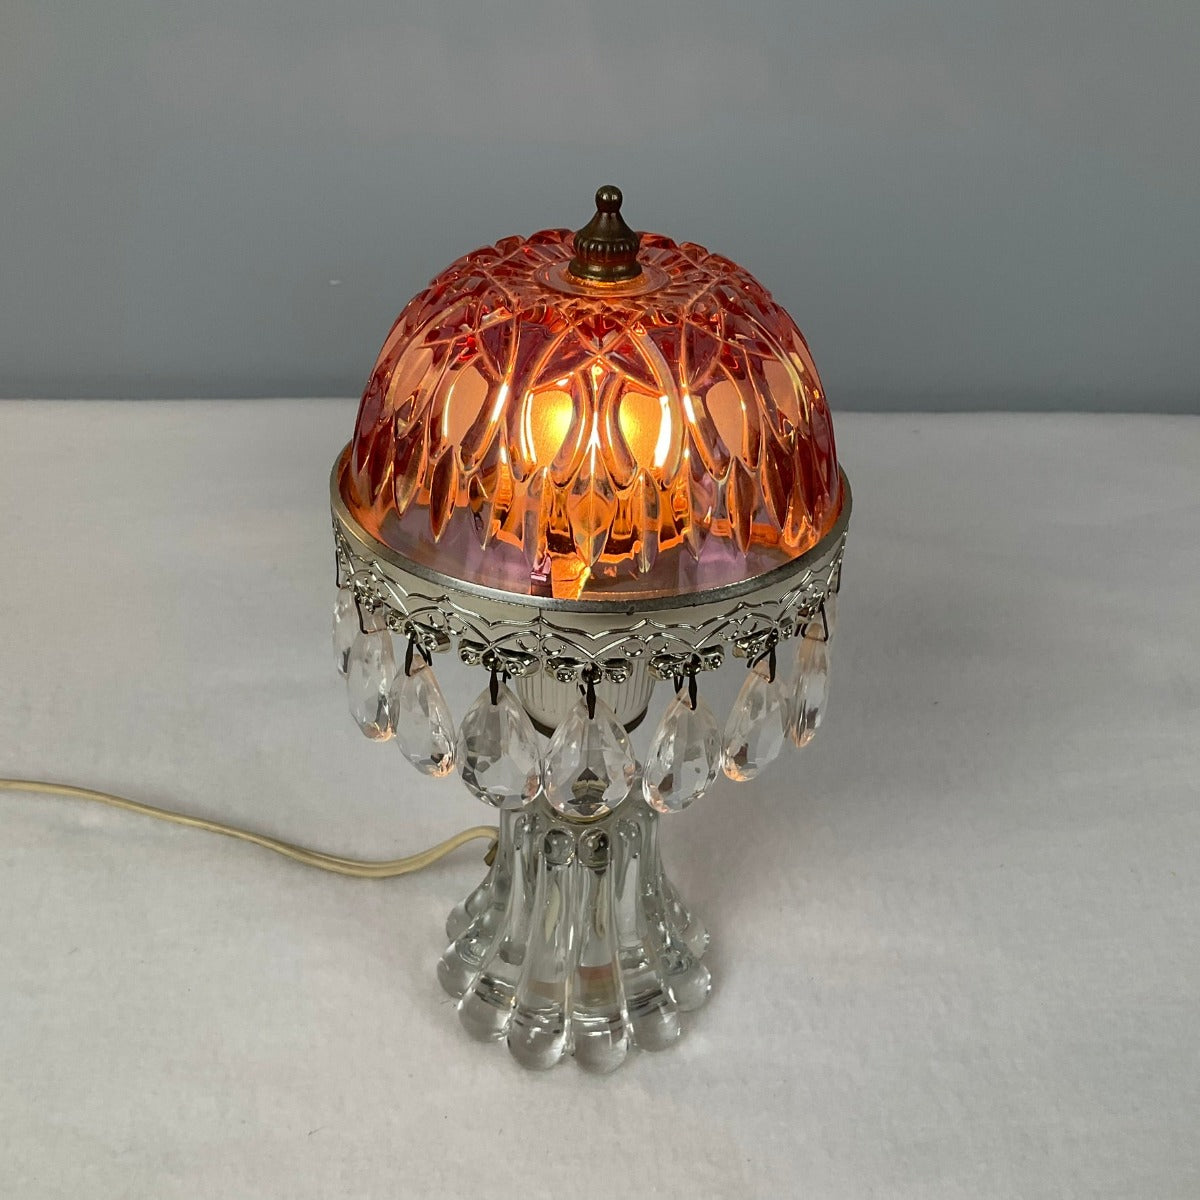 Michelotti Boudoir Lamp - Vintage Single Tier Pink Crystal Glass - Soft Warm Glow